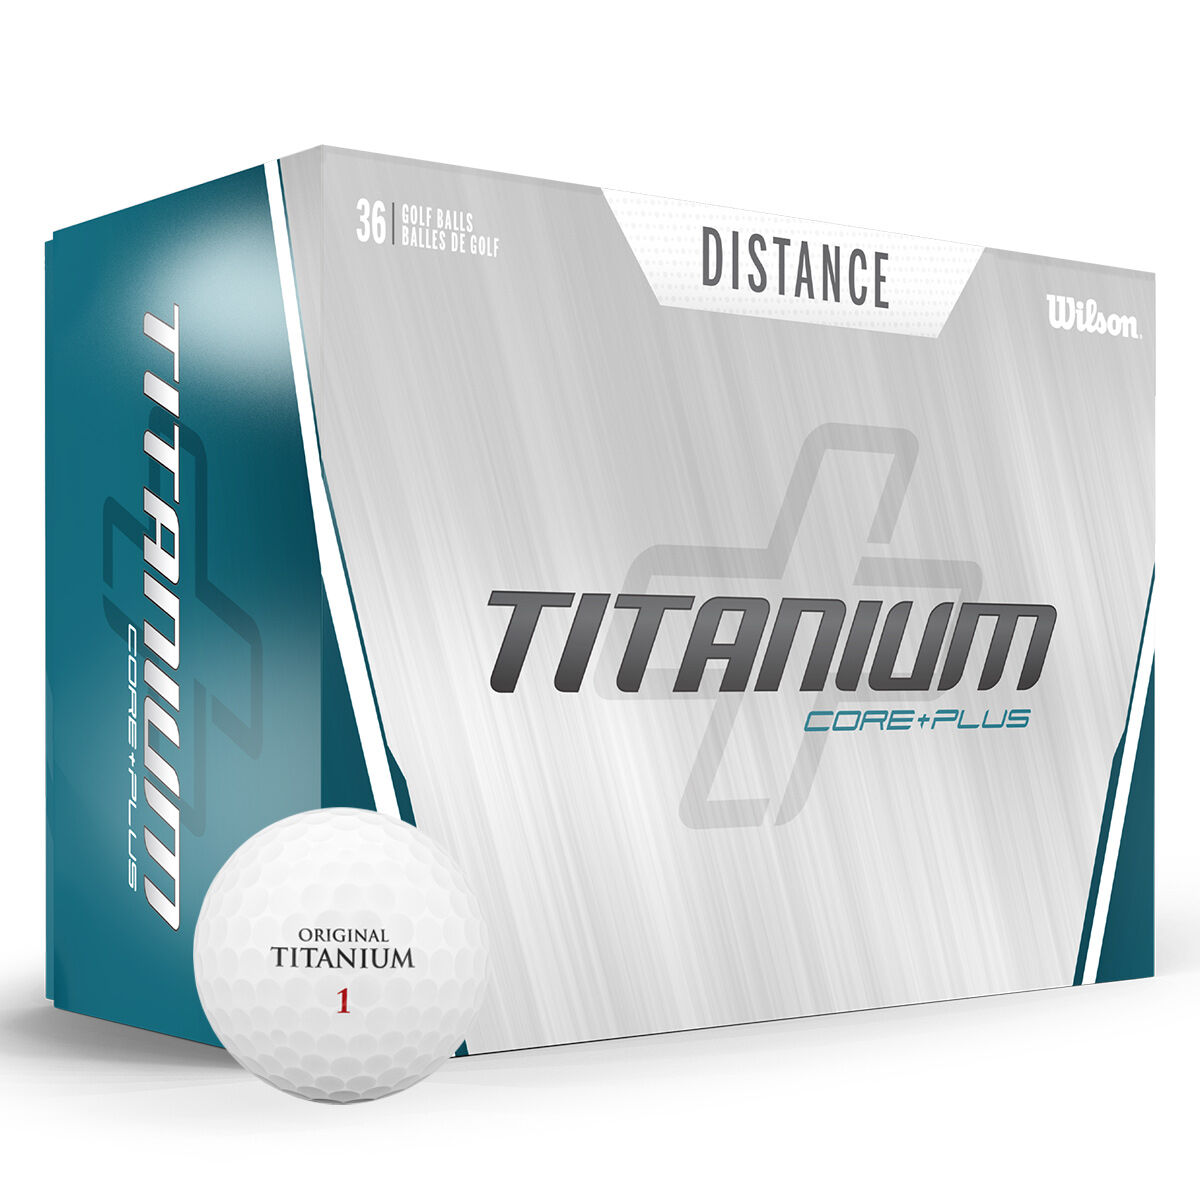 Wilson Titanium Core + Plus 36 Golf Ball Pack, Mens, White | American Golf